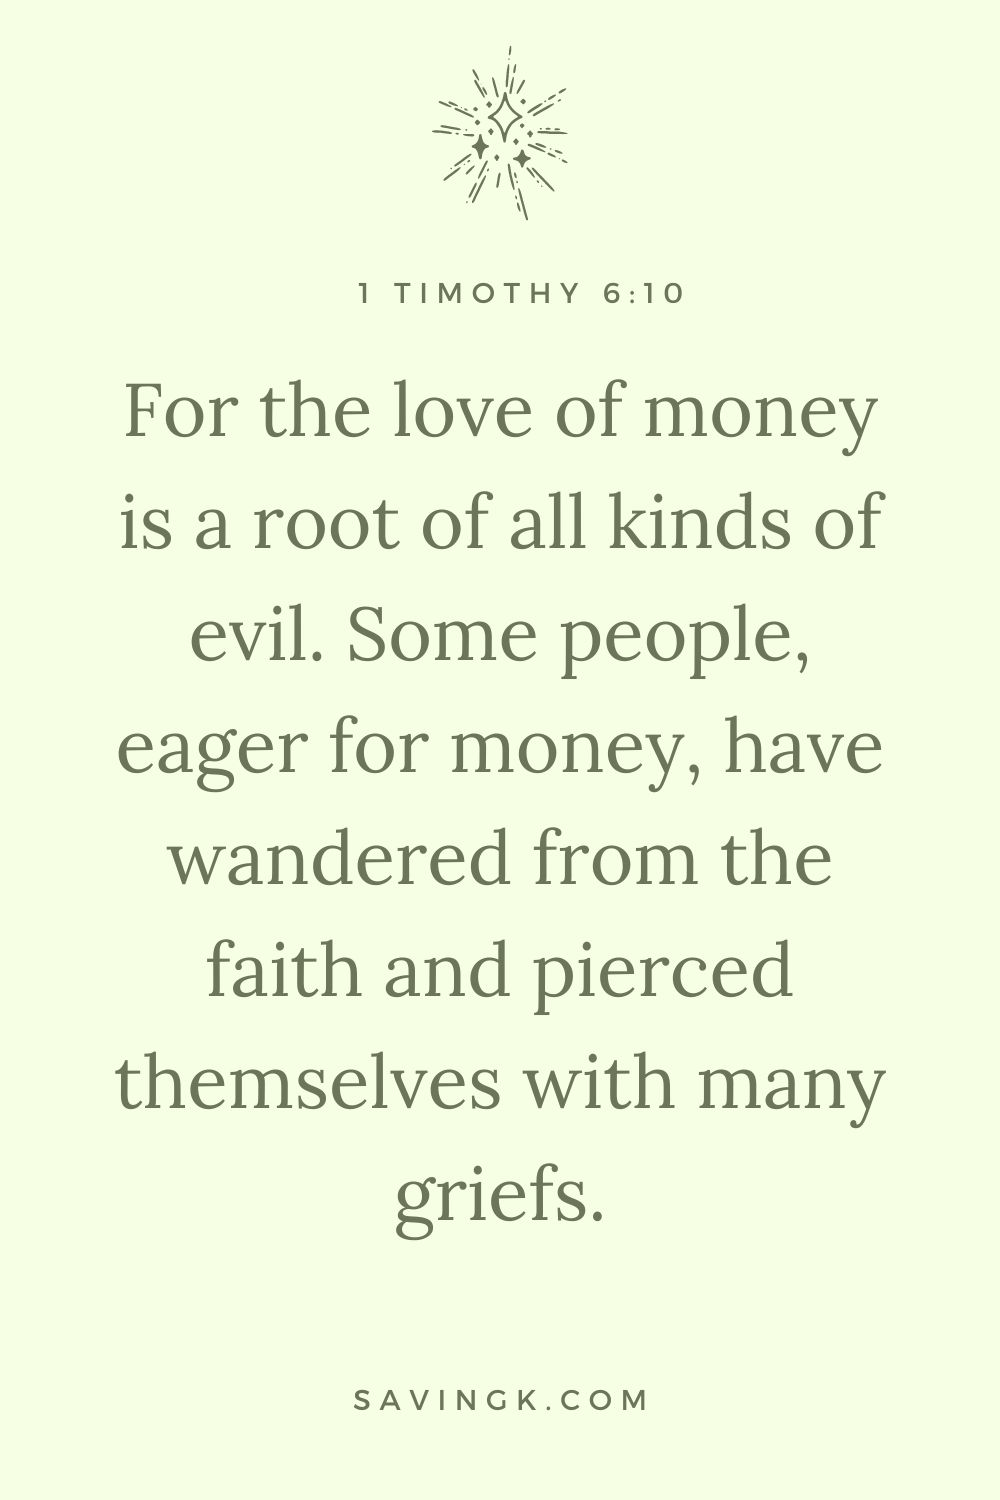 1 Timothy 6:10